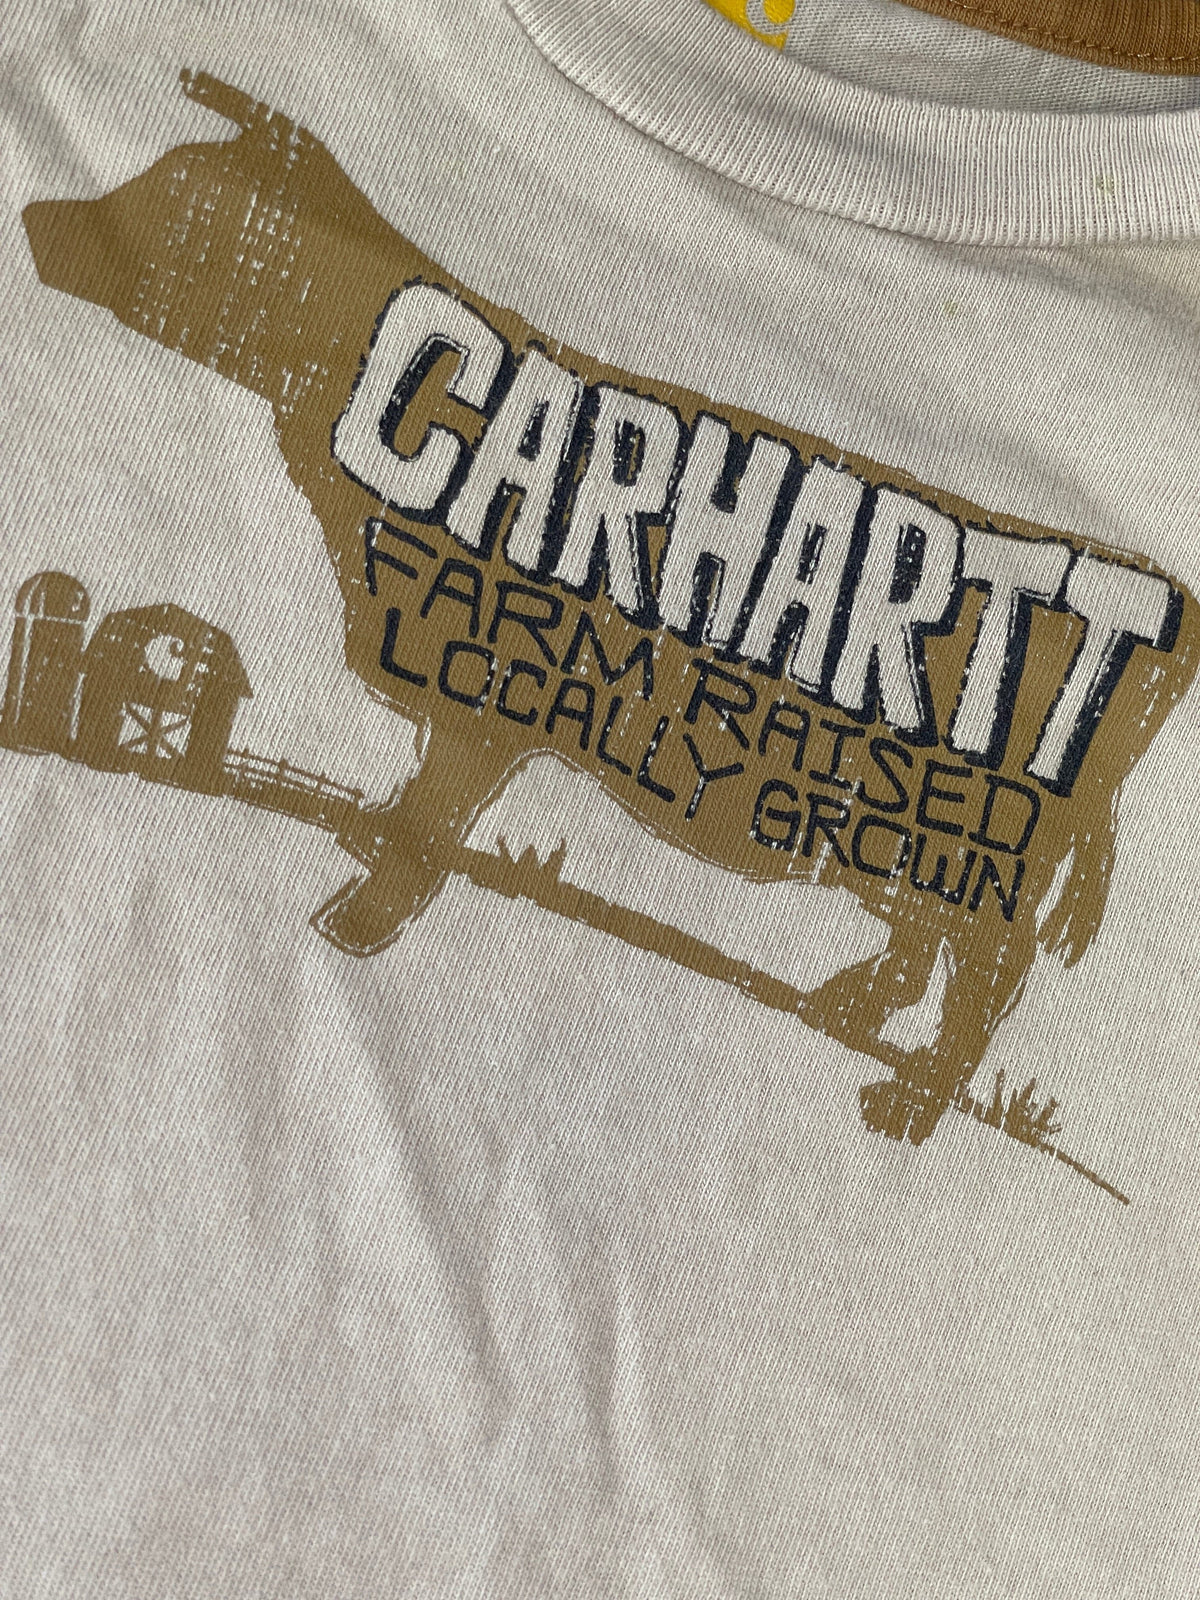 Carhartt Farm Raised Bodysuit/Vest 18 months